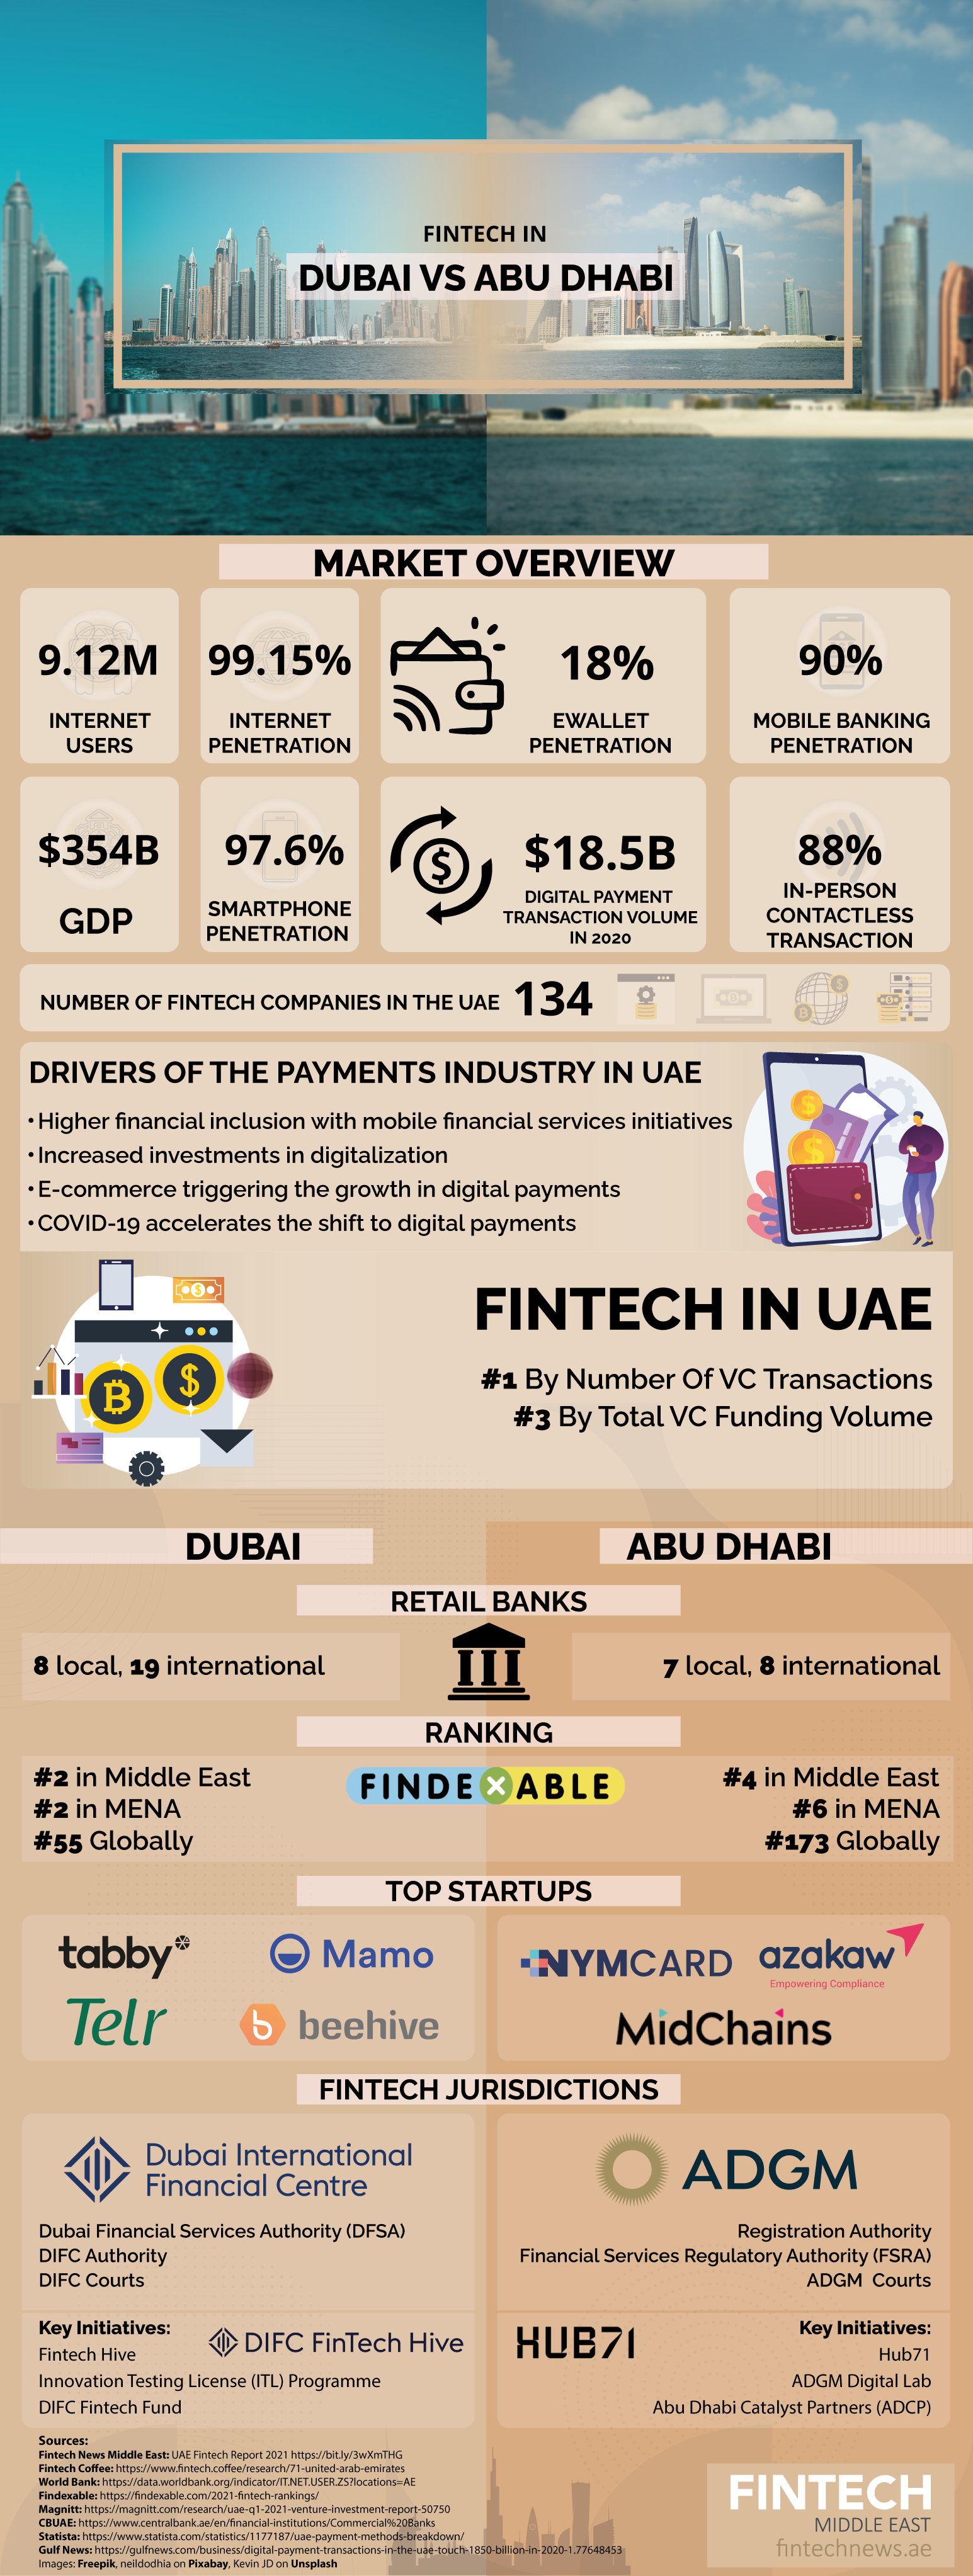 Fintech in Dubai and Abu Dhabi 2021